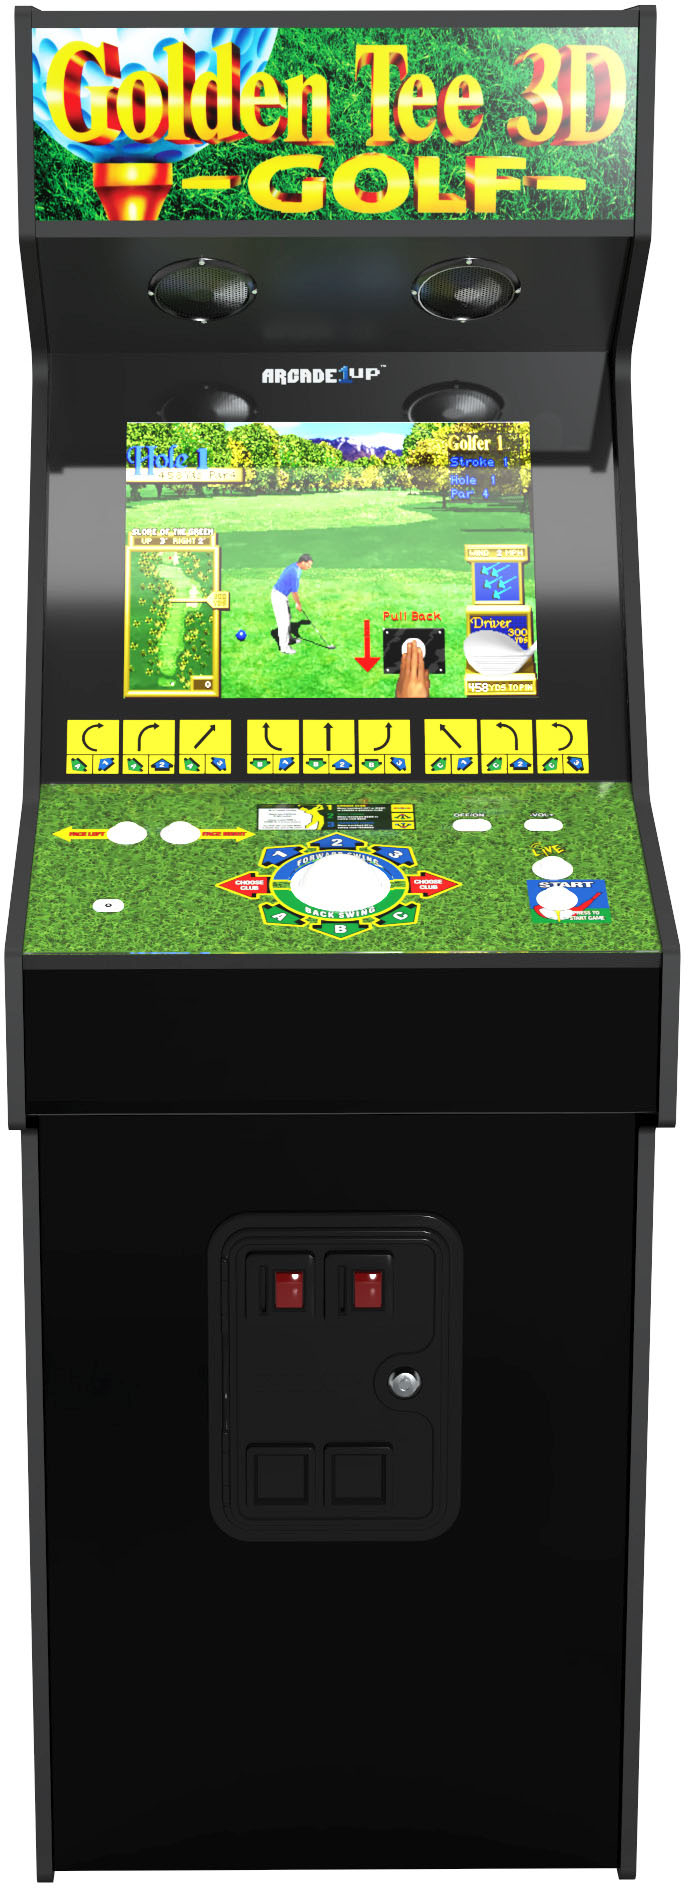 Arcade1Up - Golden Tee 3D Golf 19" Arcade with Lit Marquee